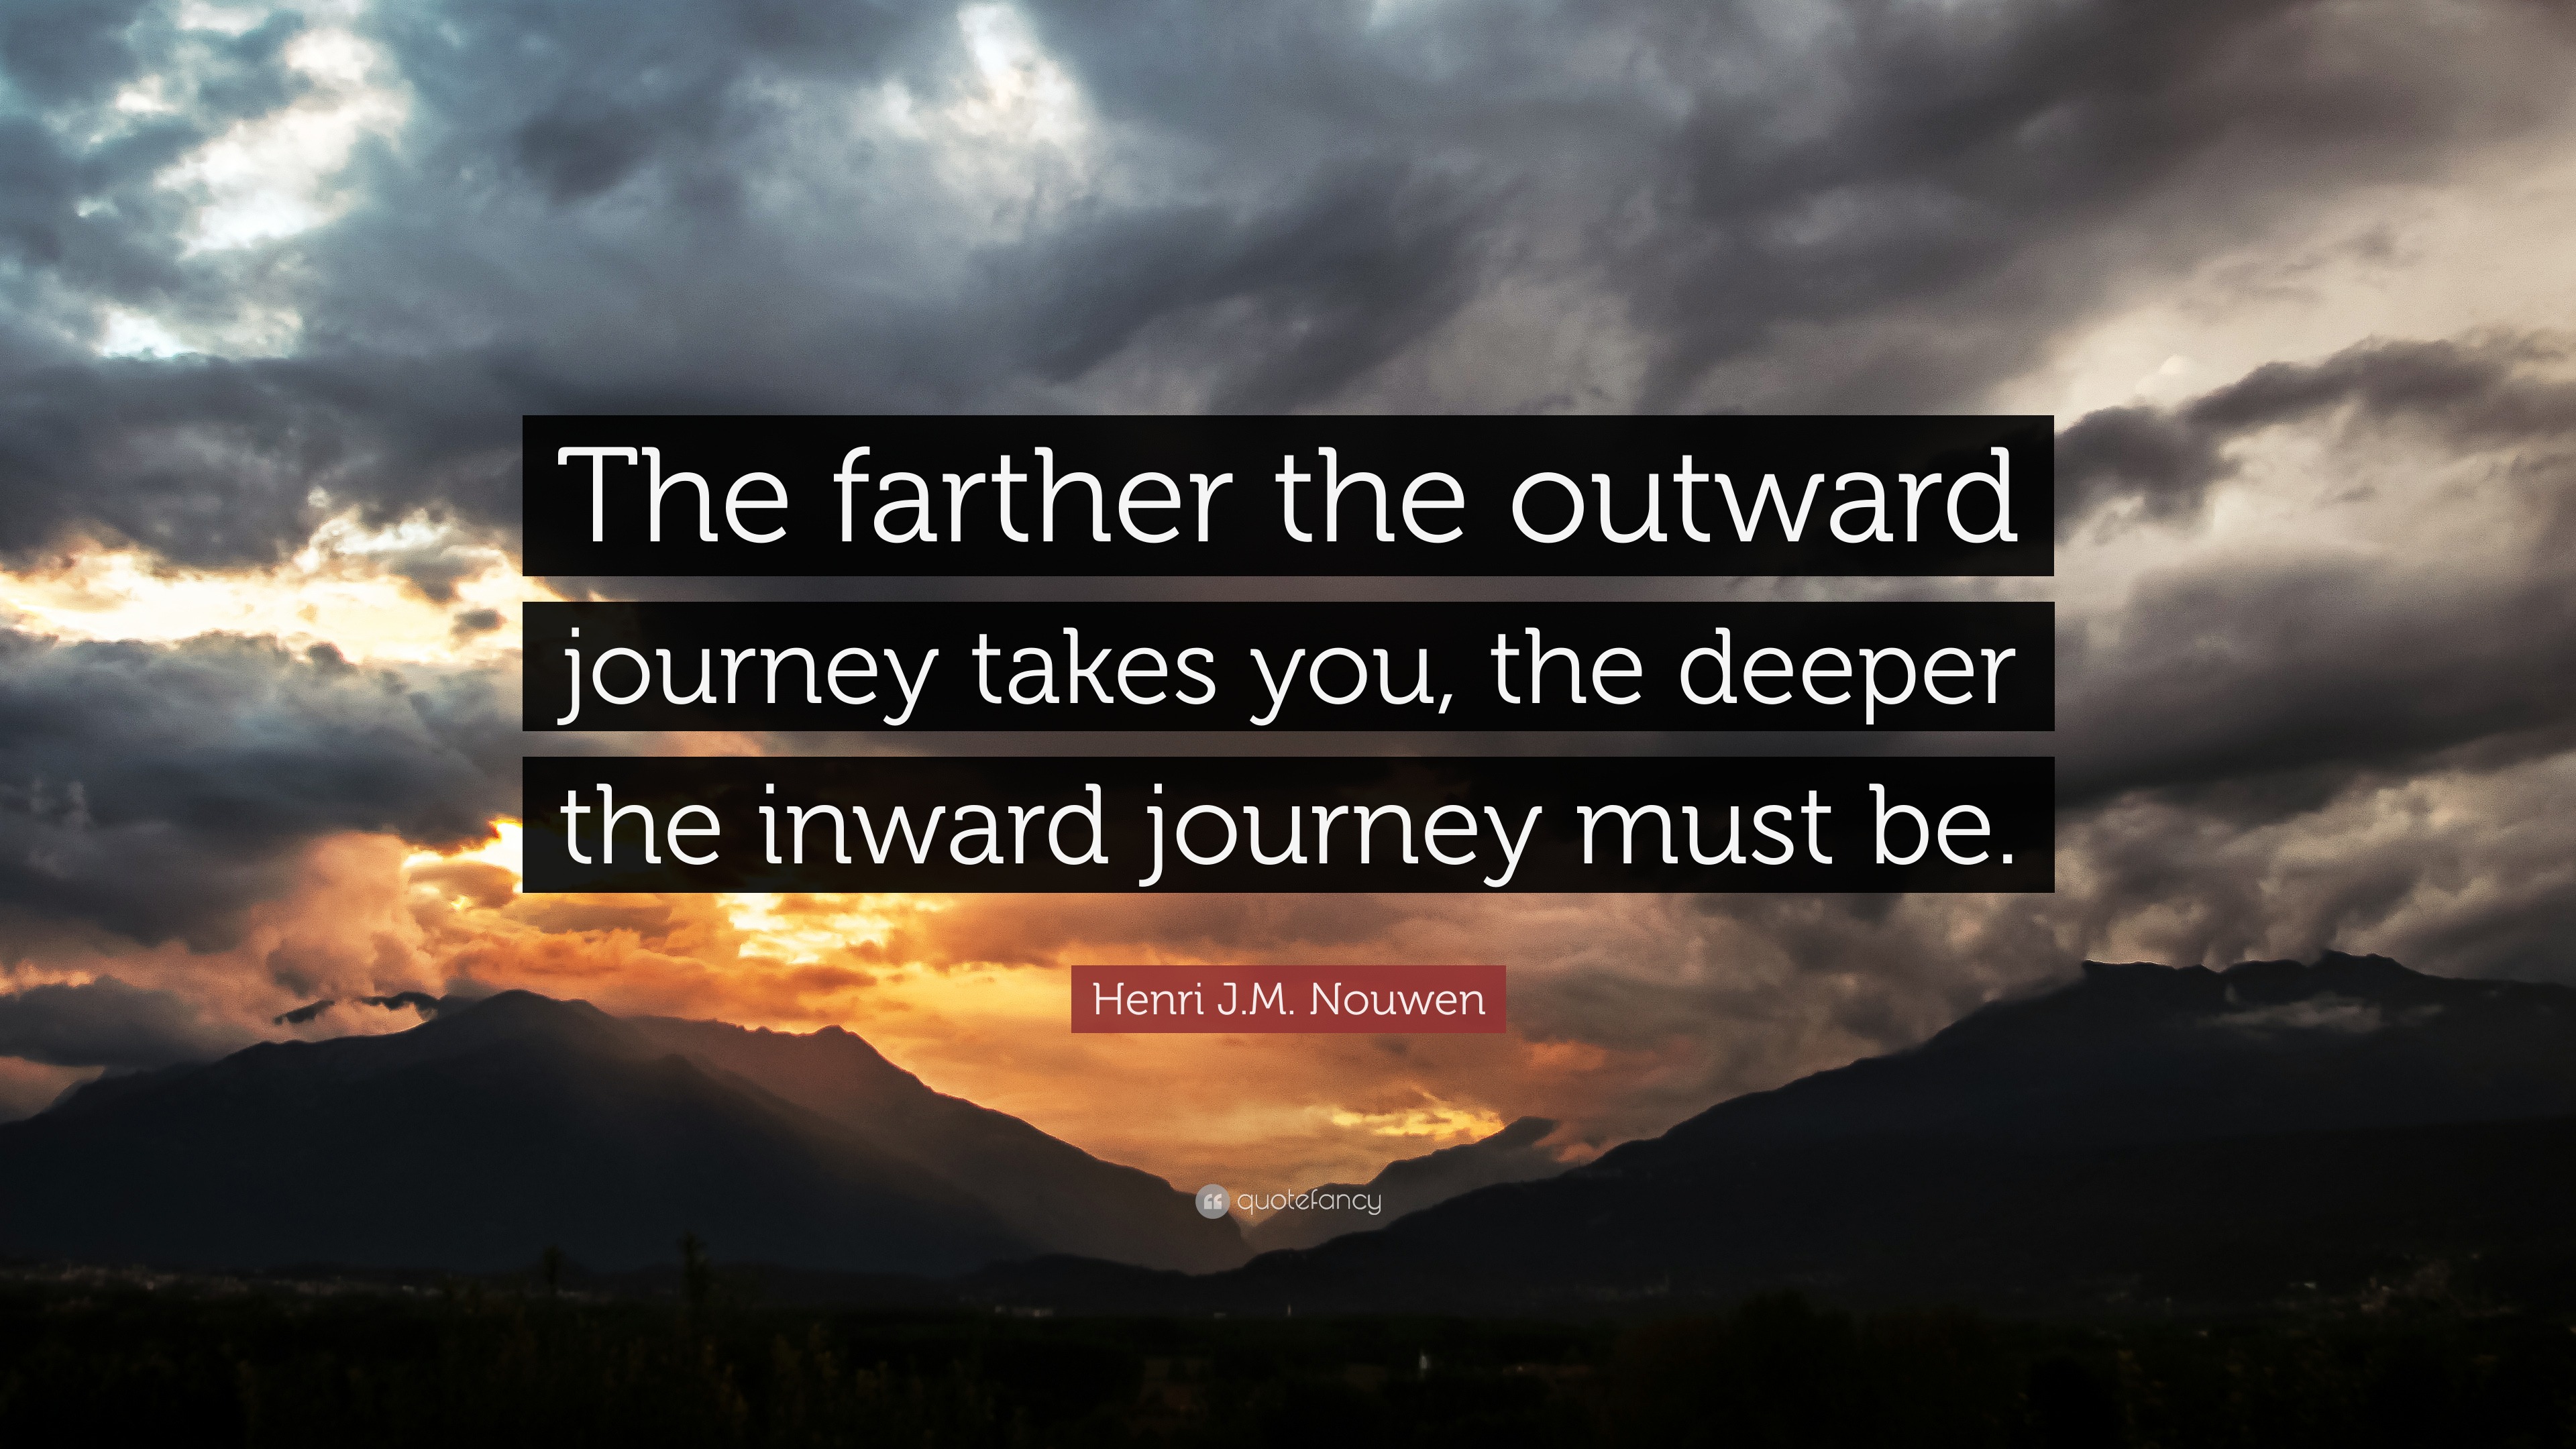 que es outward journey